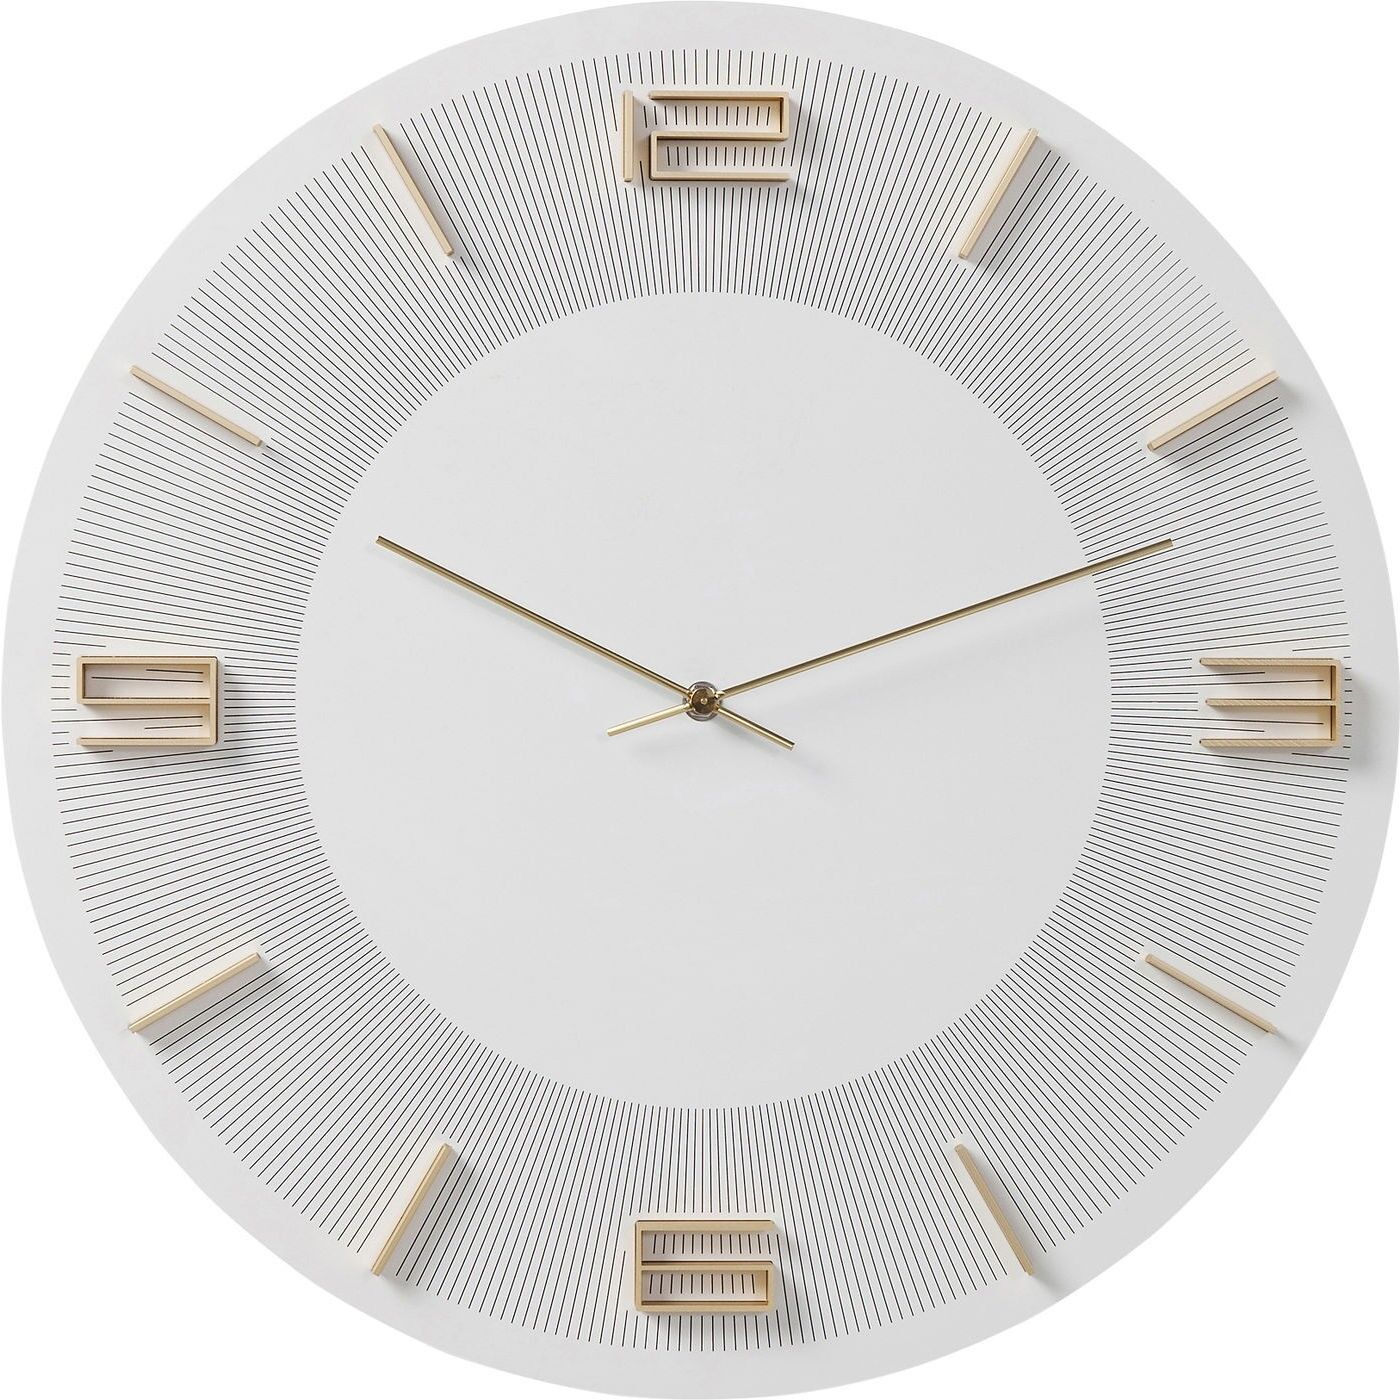 Kare Design Reloj pared blanco/oro ø49cm